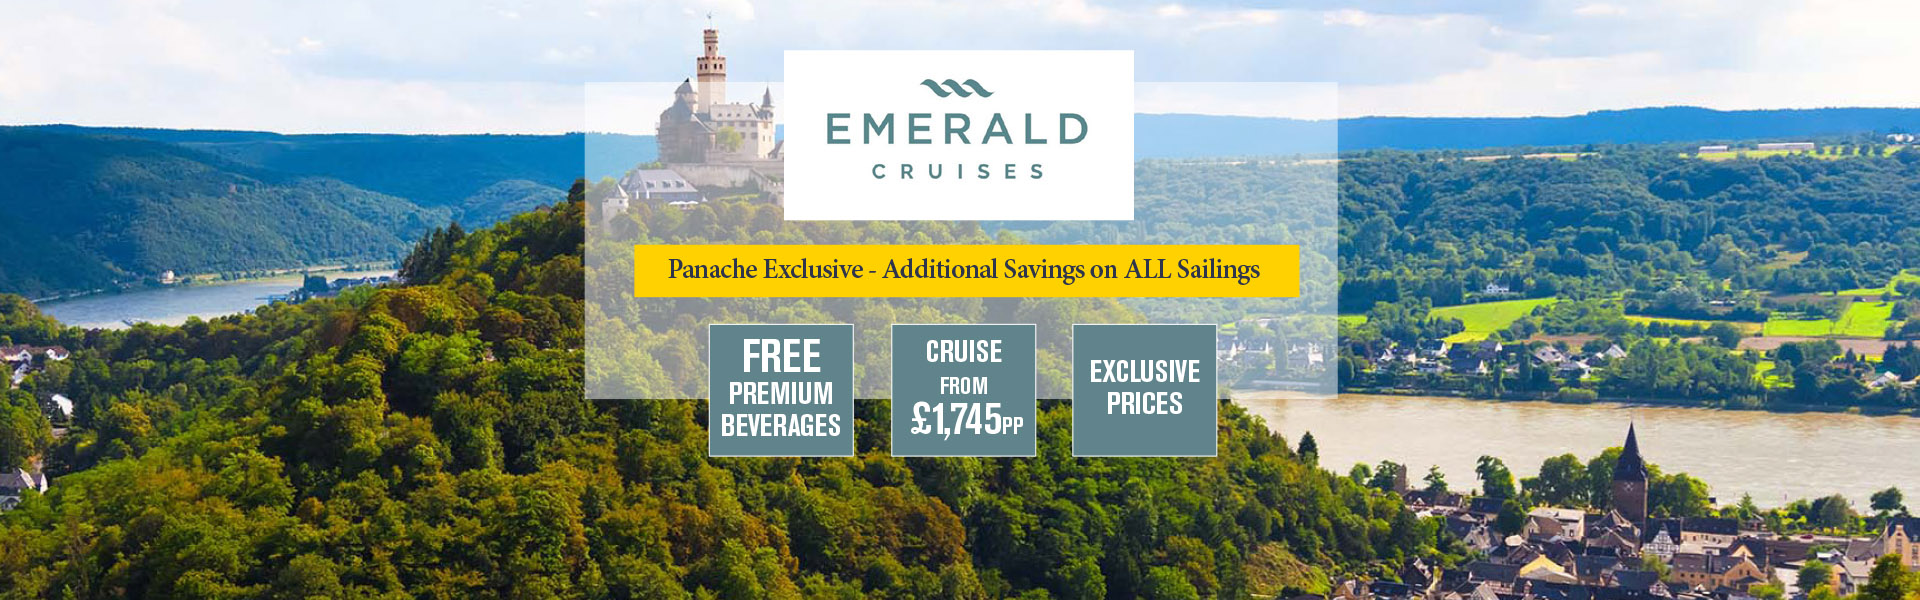 Emerald River Cruises